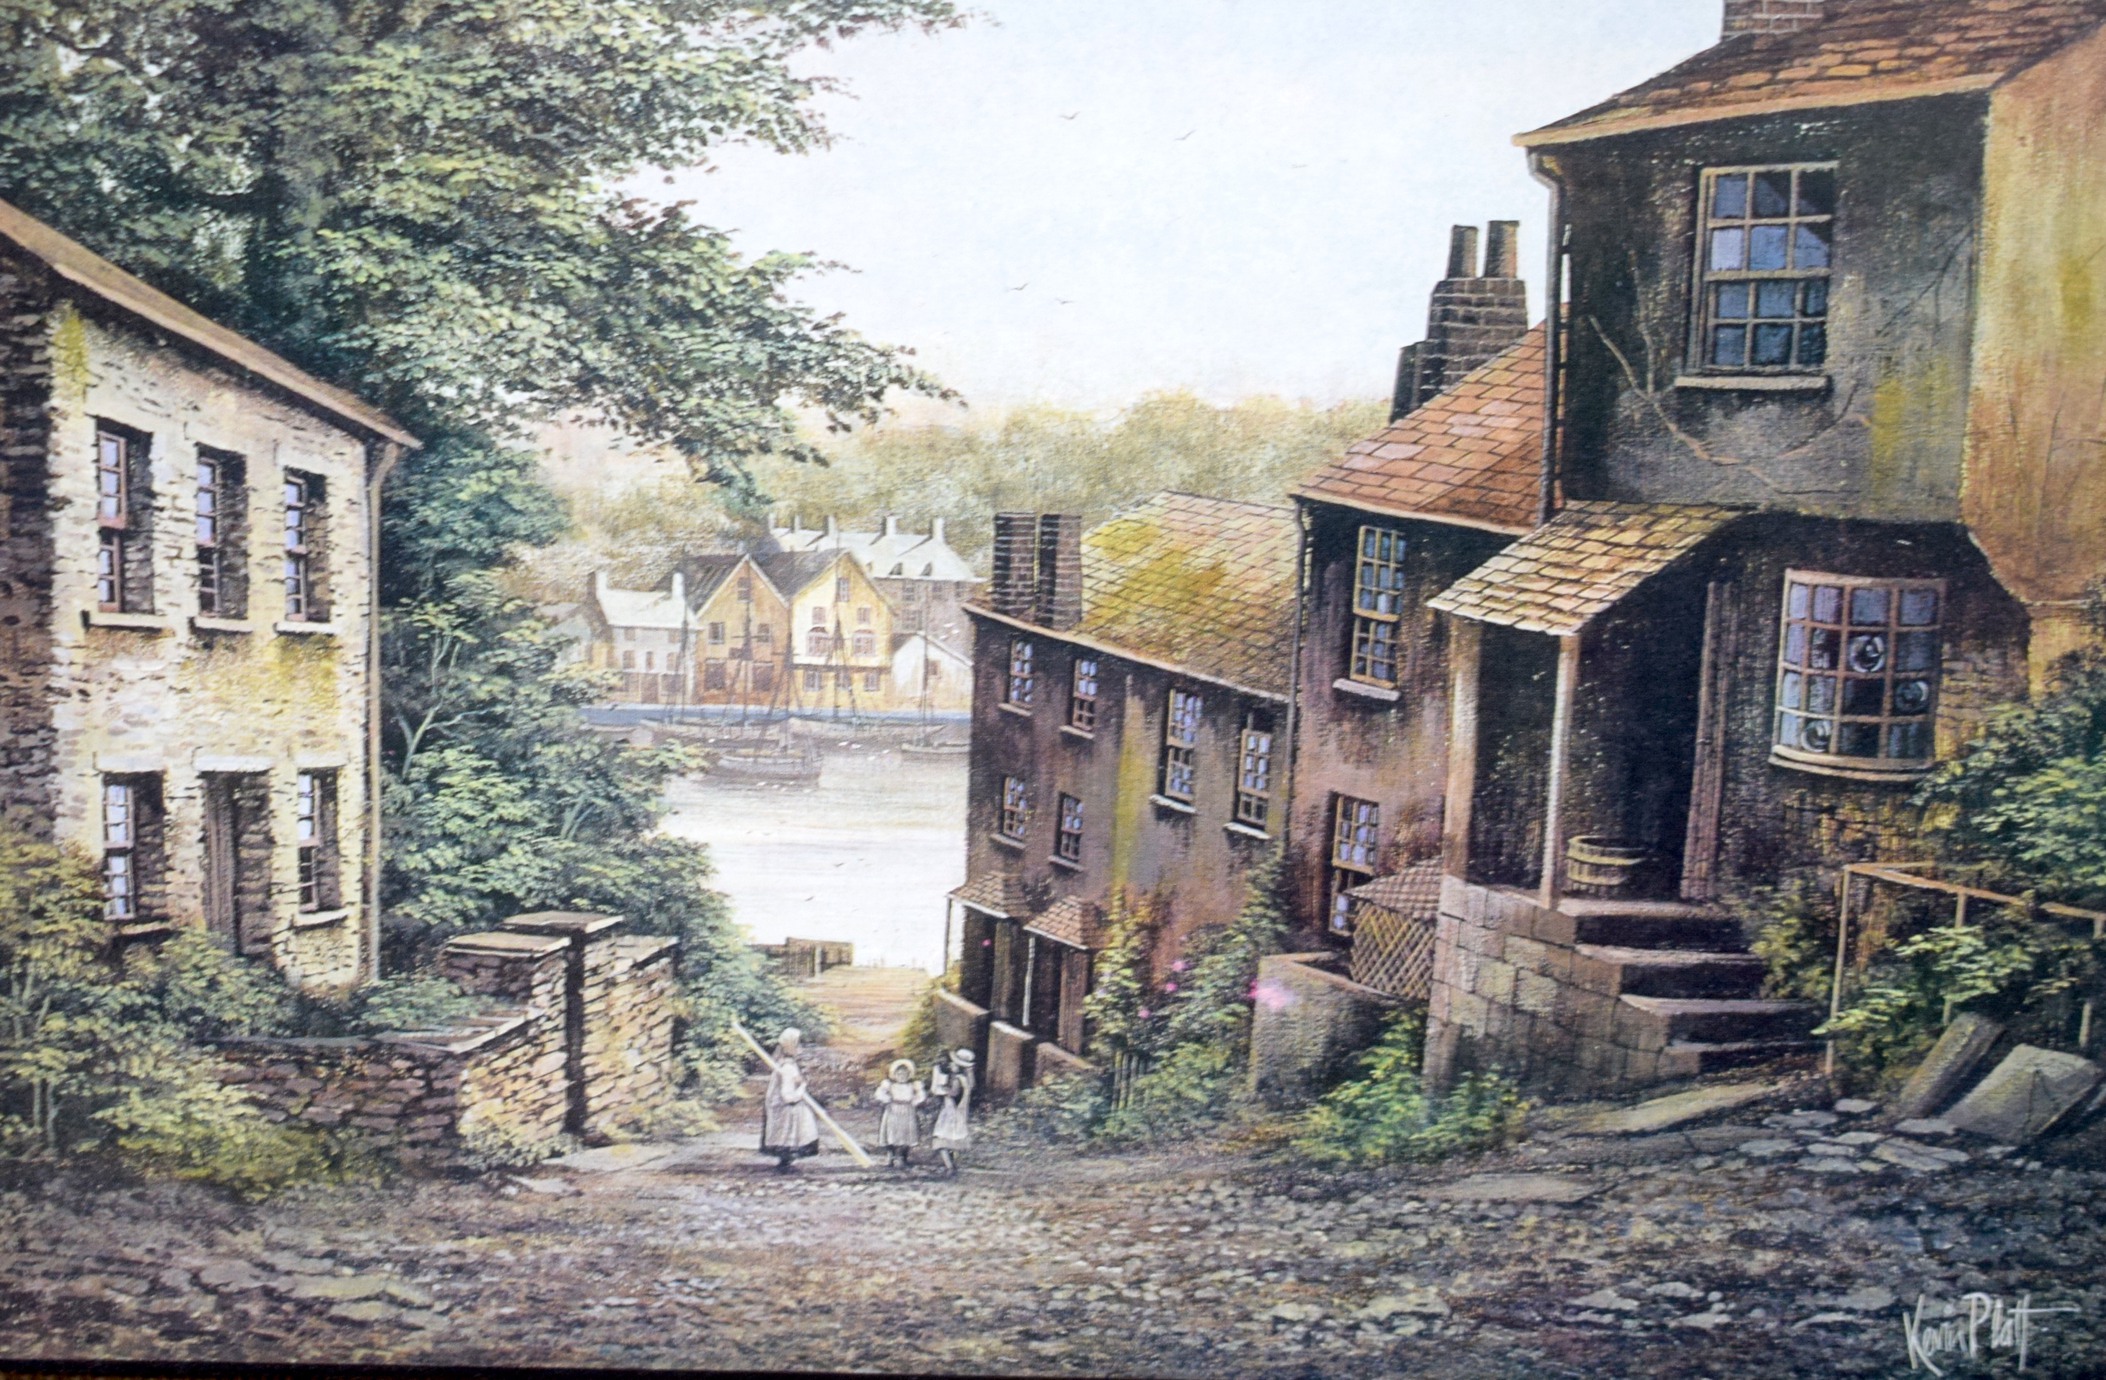 AFTER KEVIN PLATT (English, Manchester born), framed print on board, Cornwall scenes. 20 cm x 30